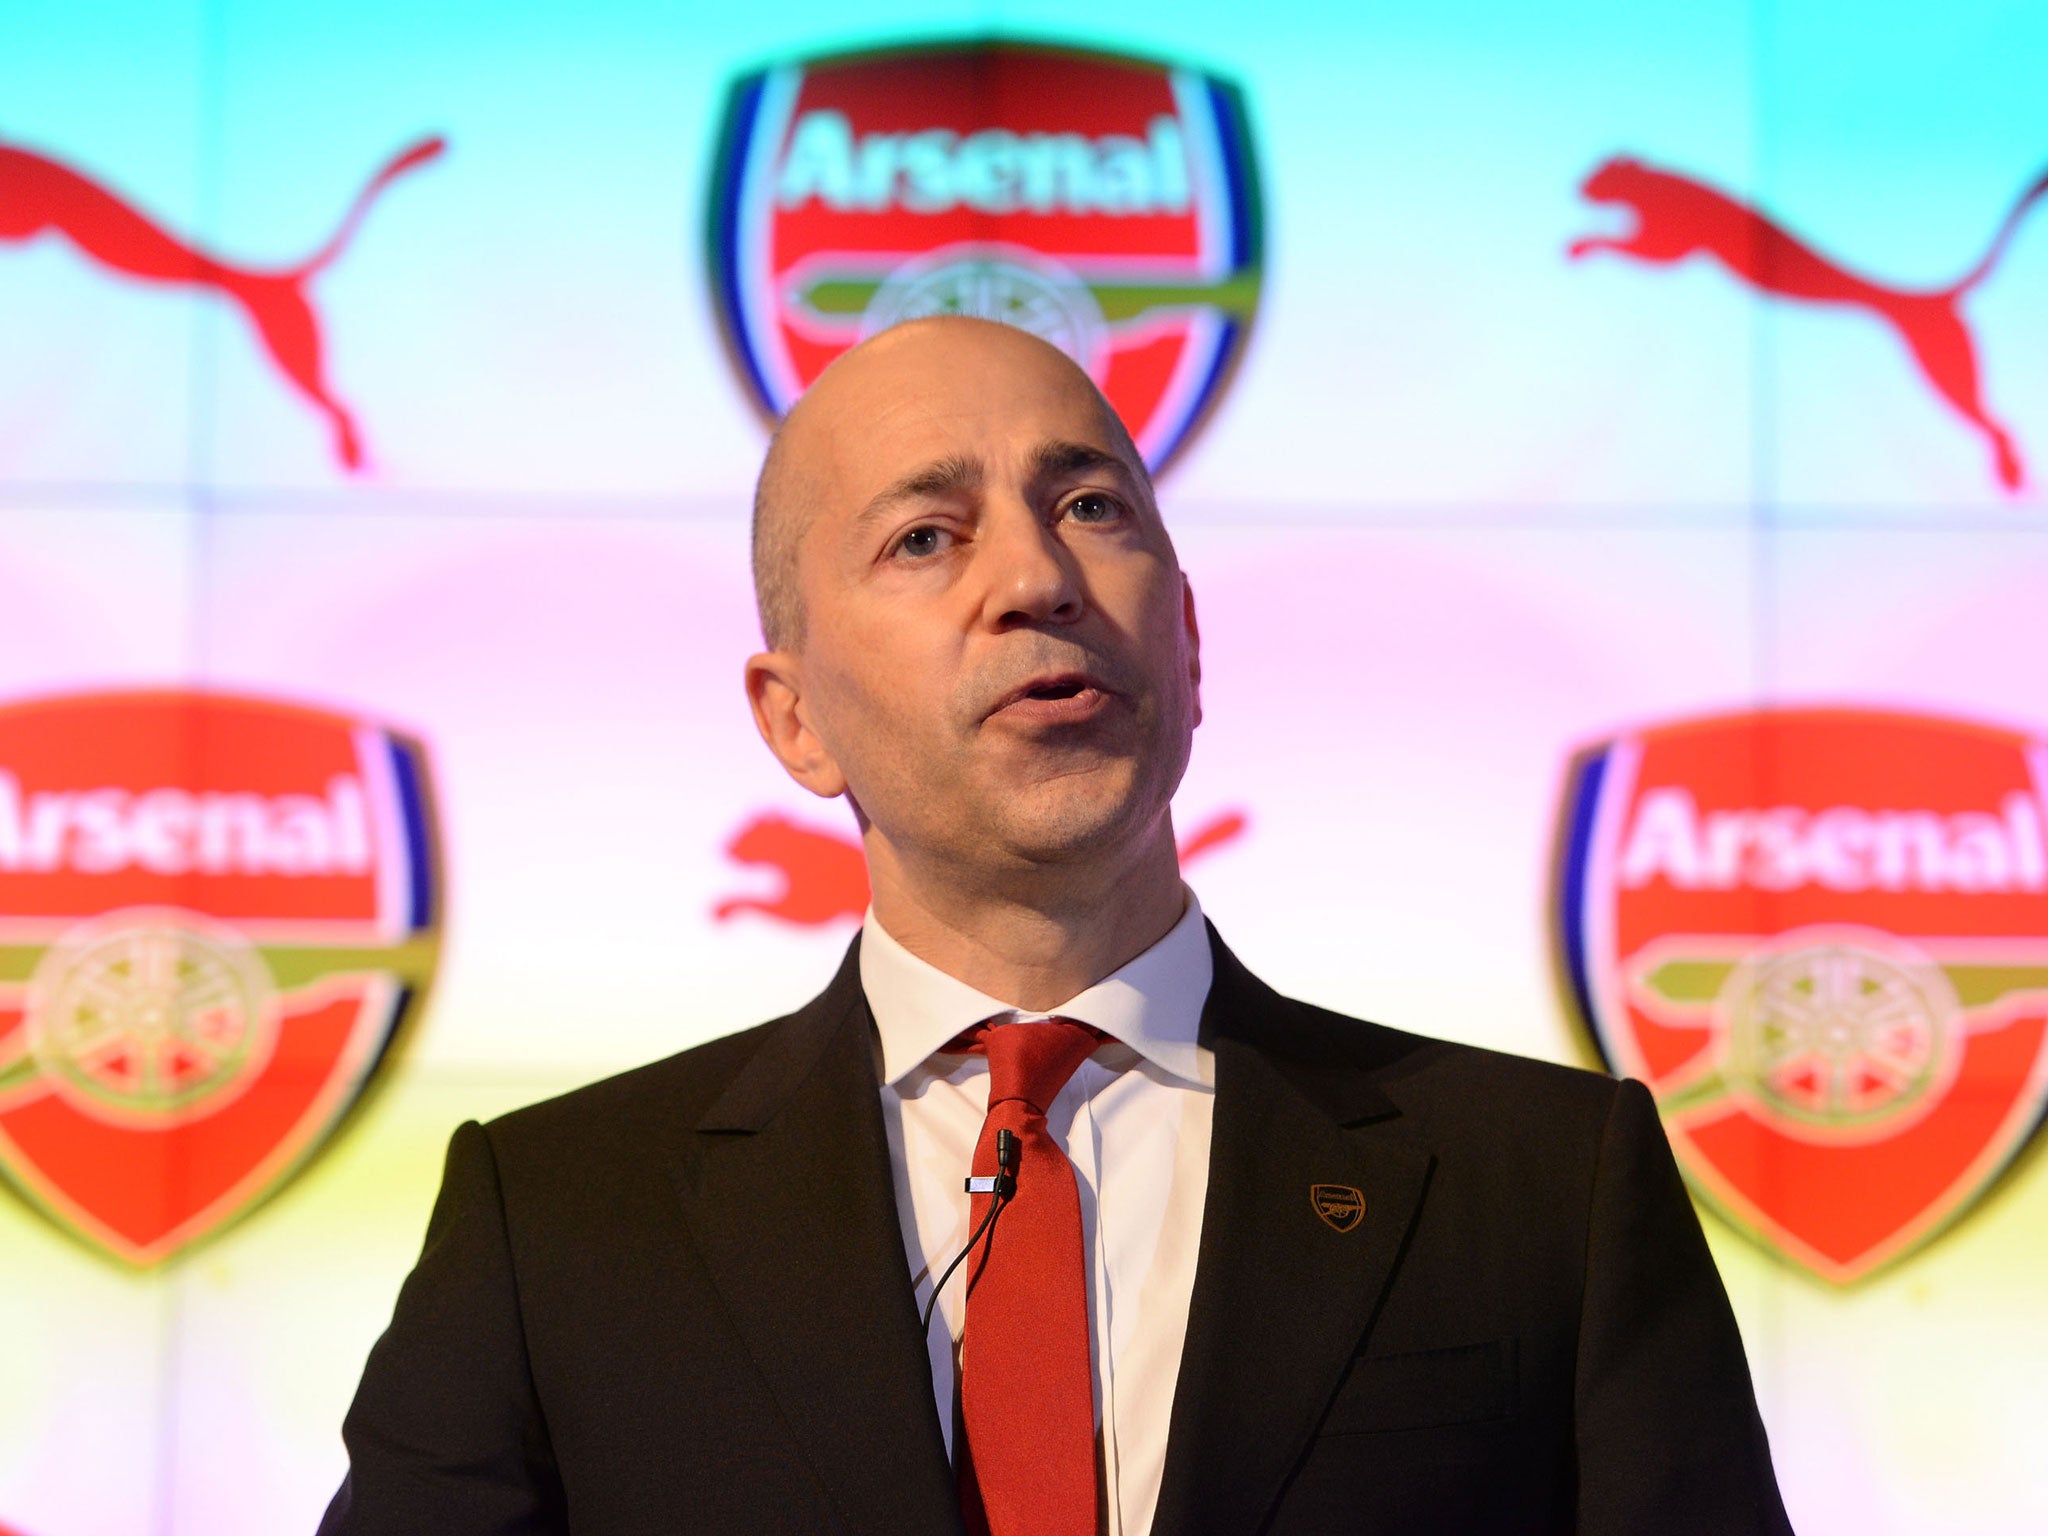 &#13;
Ivan Gazidis the CEO of Arsenal &#13;